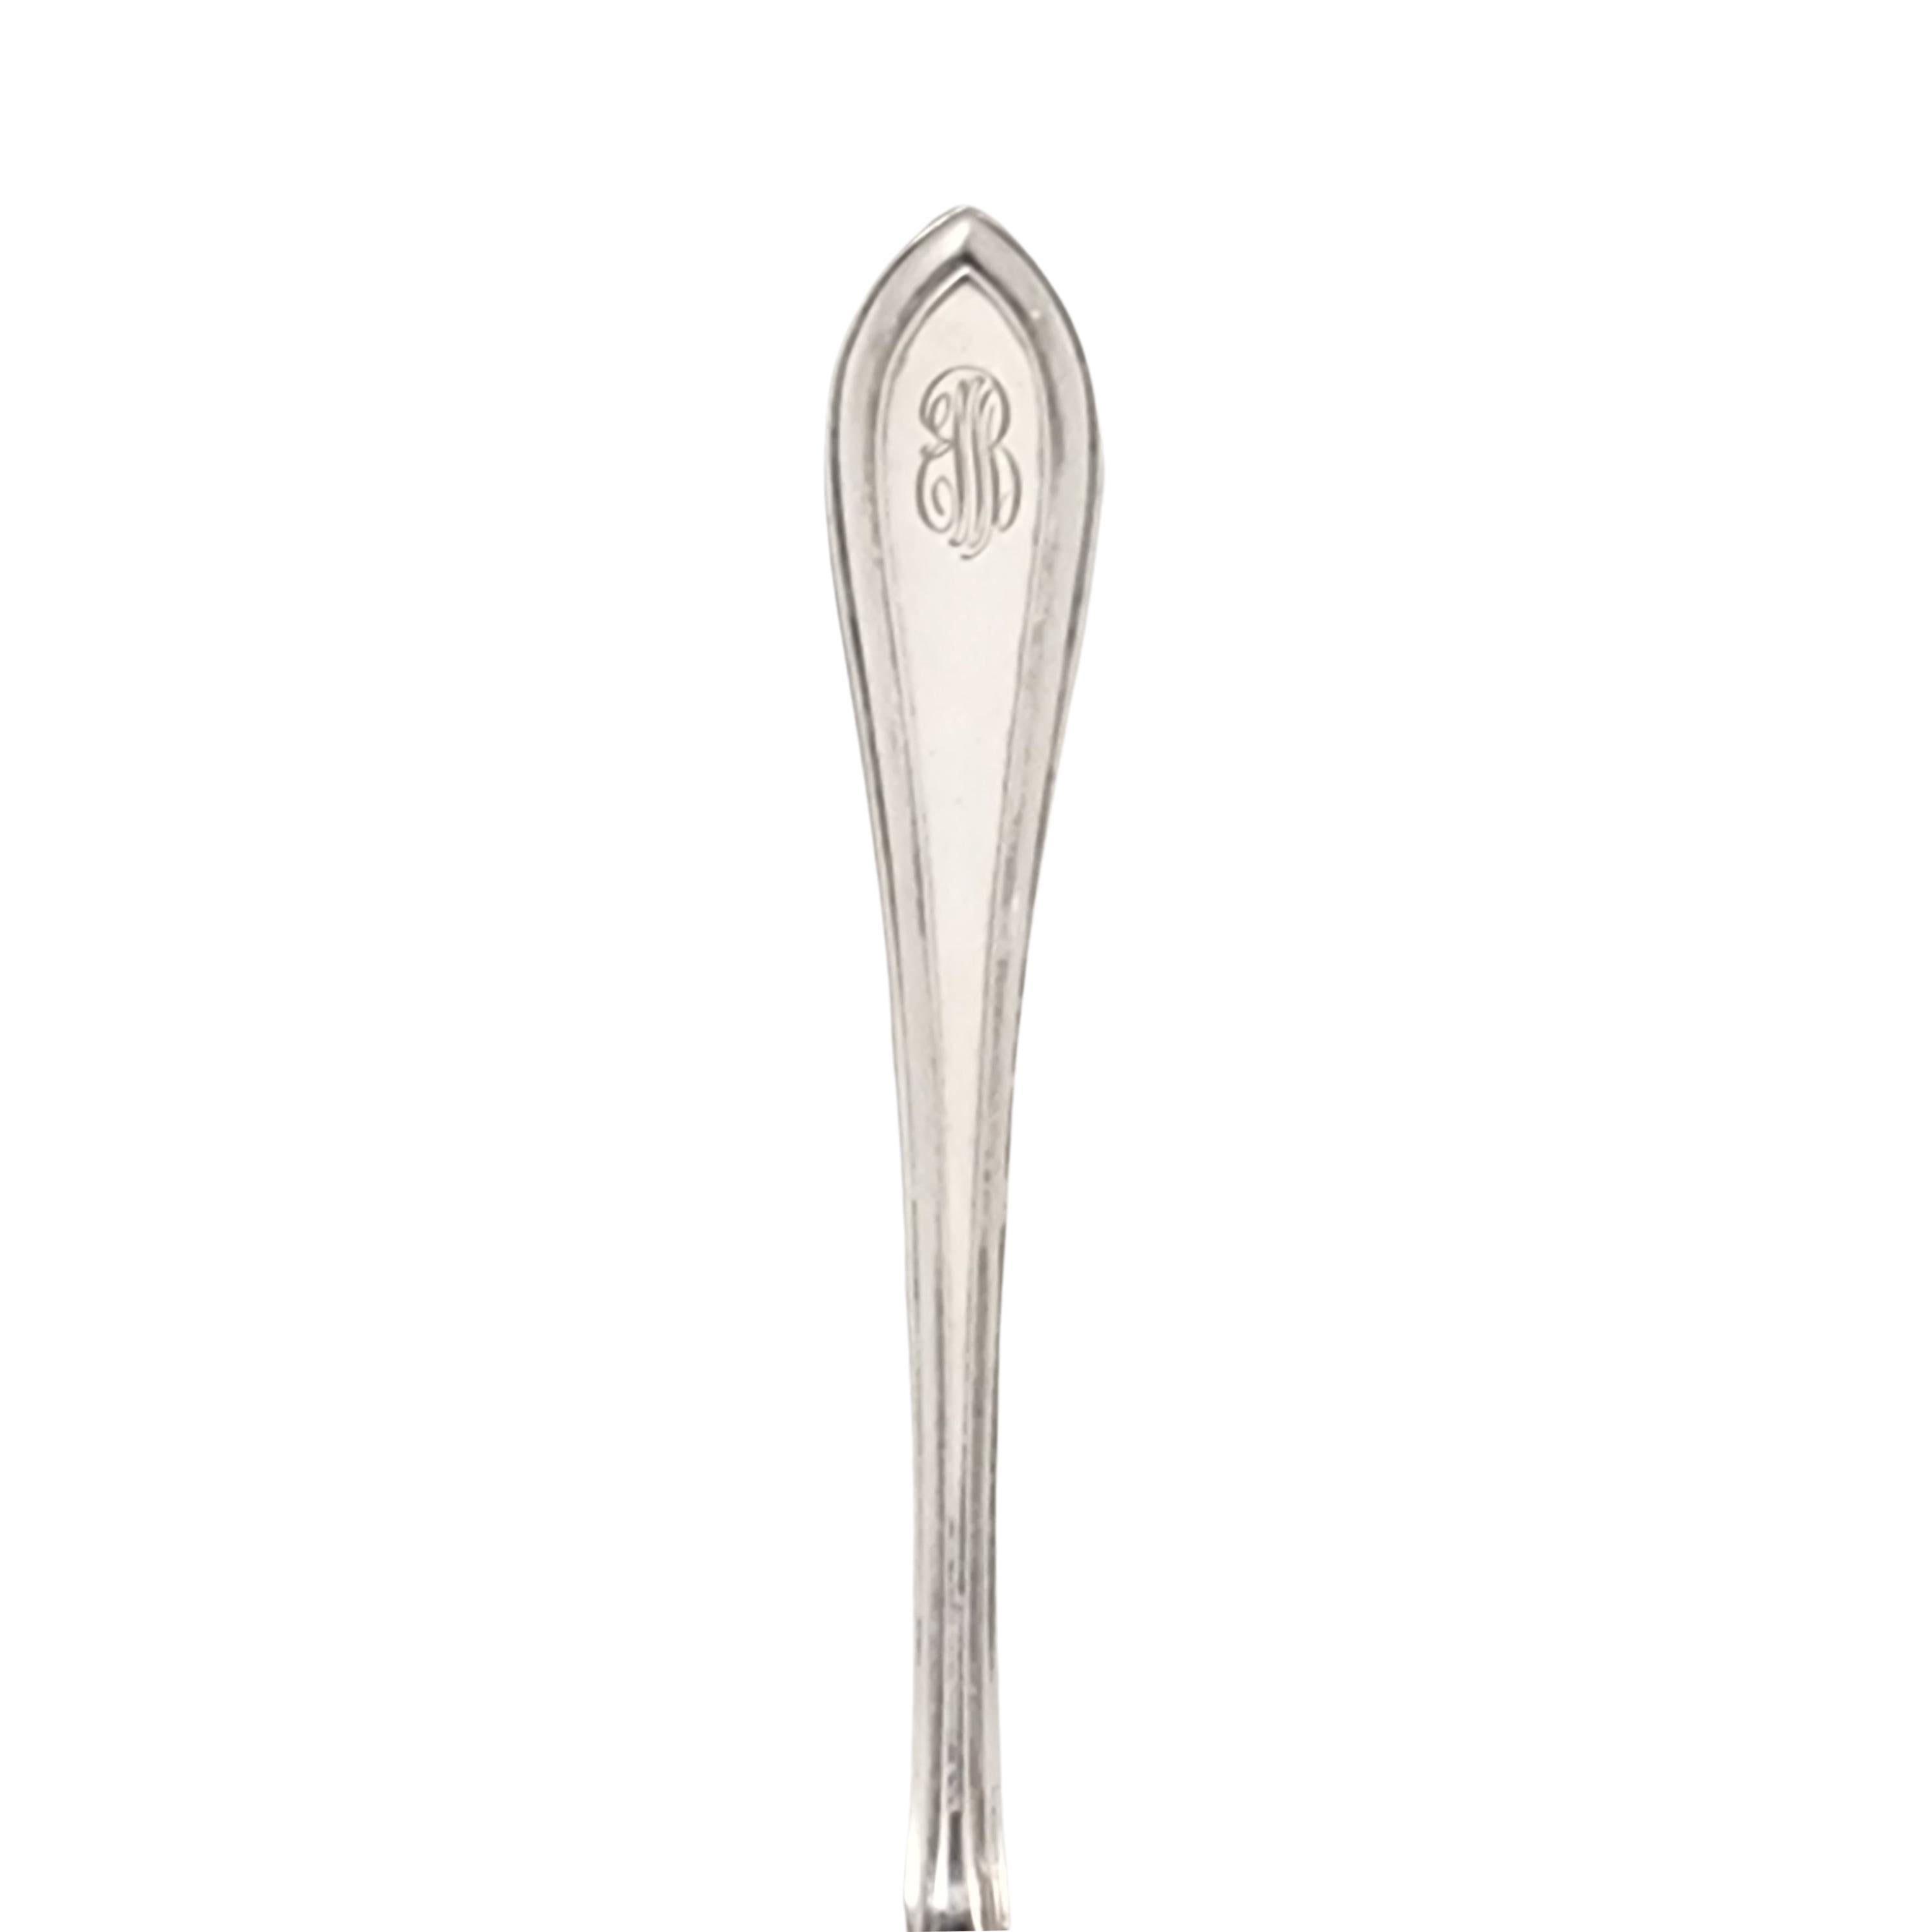 Dominick & Haff JE Caldwell Priscilla Sterling Silver Serving Fork w/mono #15600 In Good Condition For Sale In Washington Depot, CT